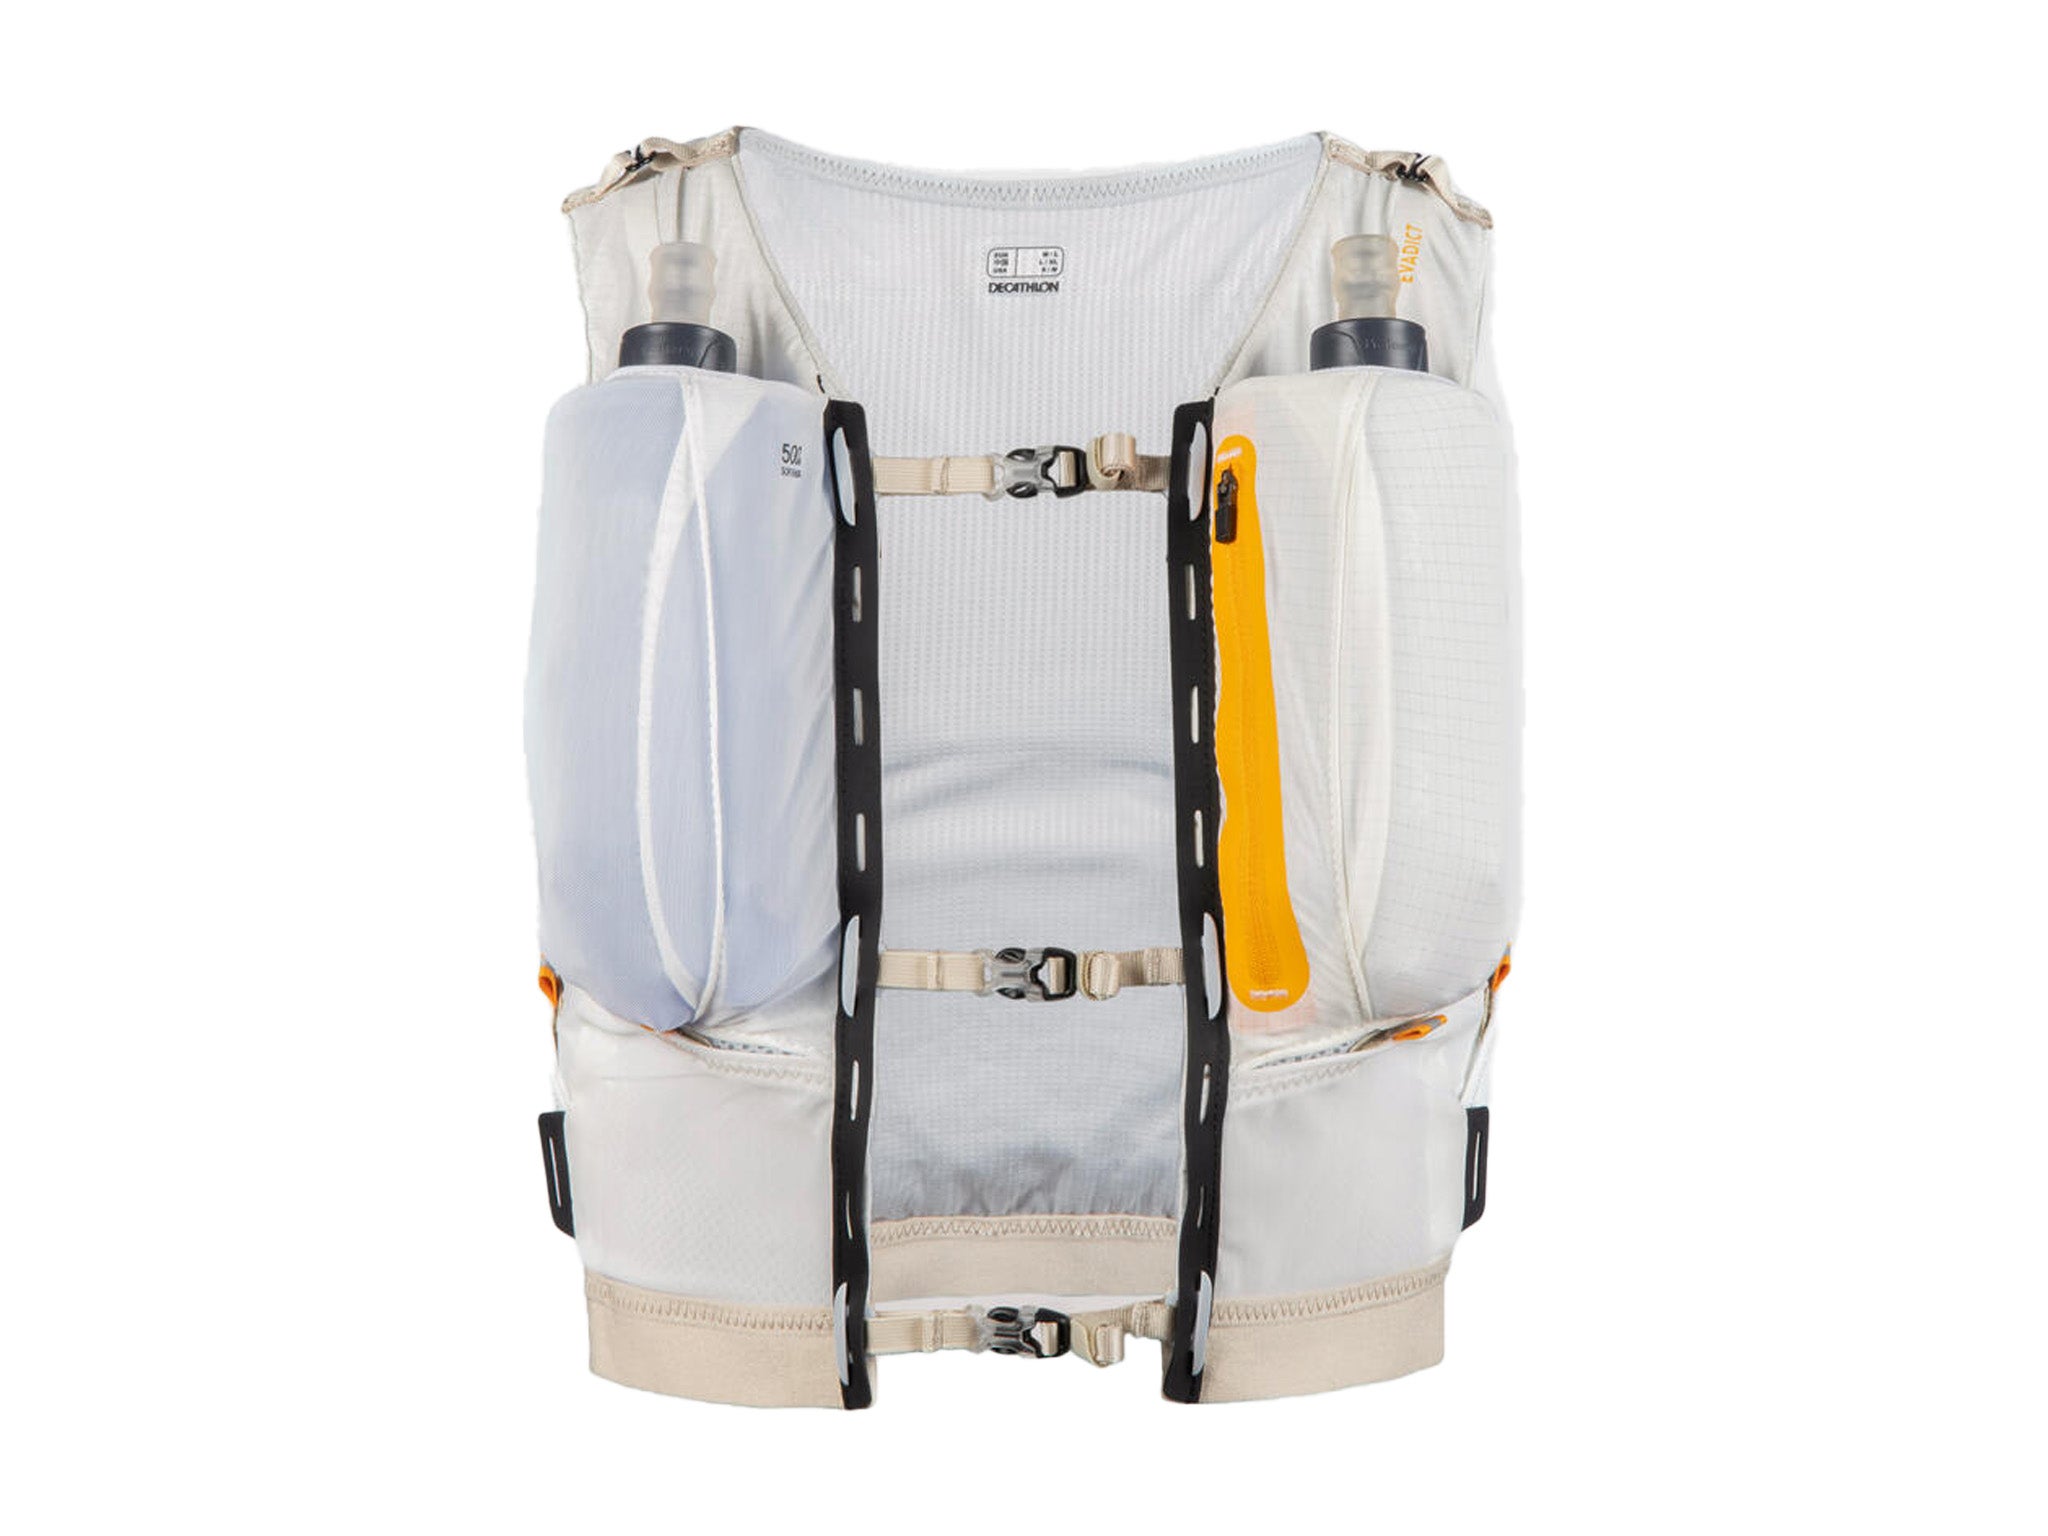 Decathlon hydration vest and bottle holder